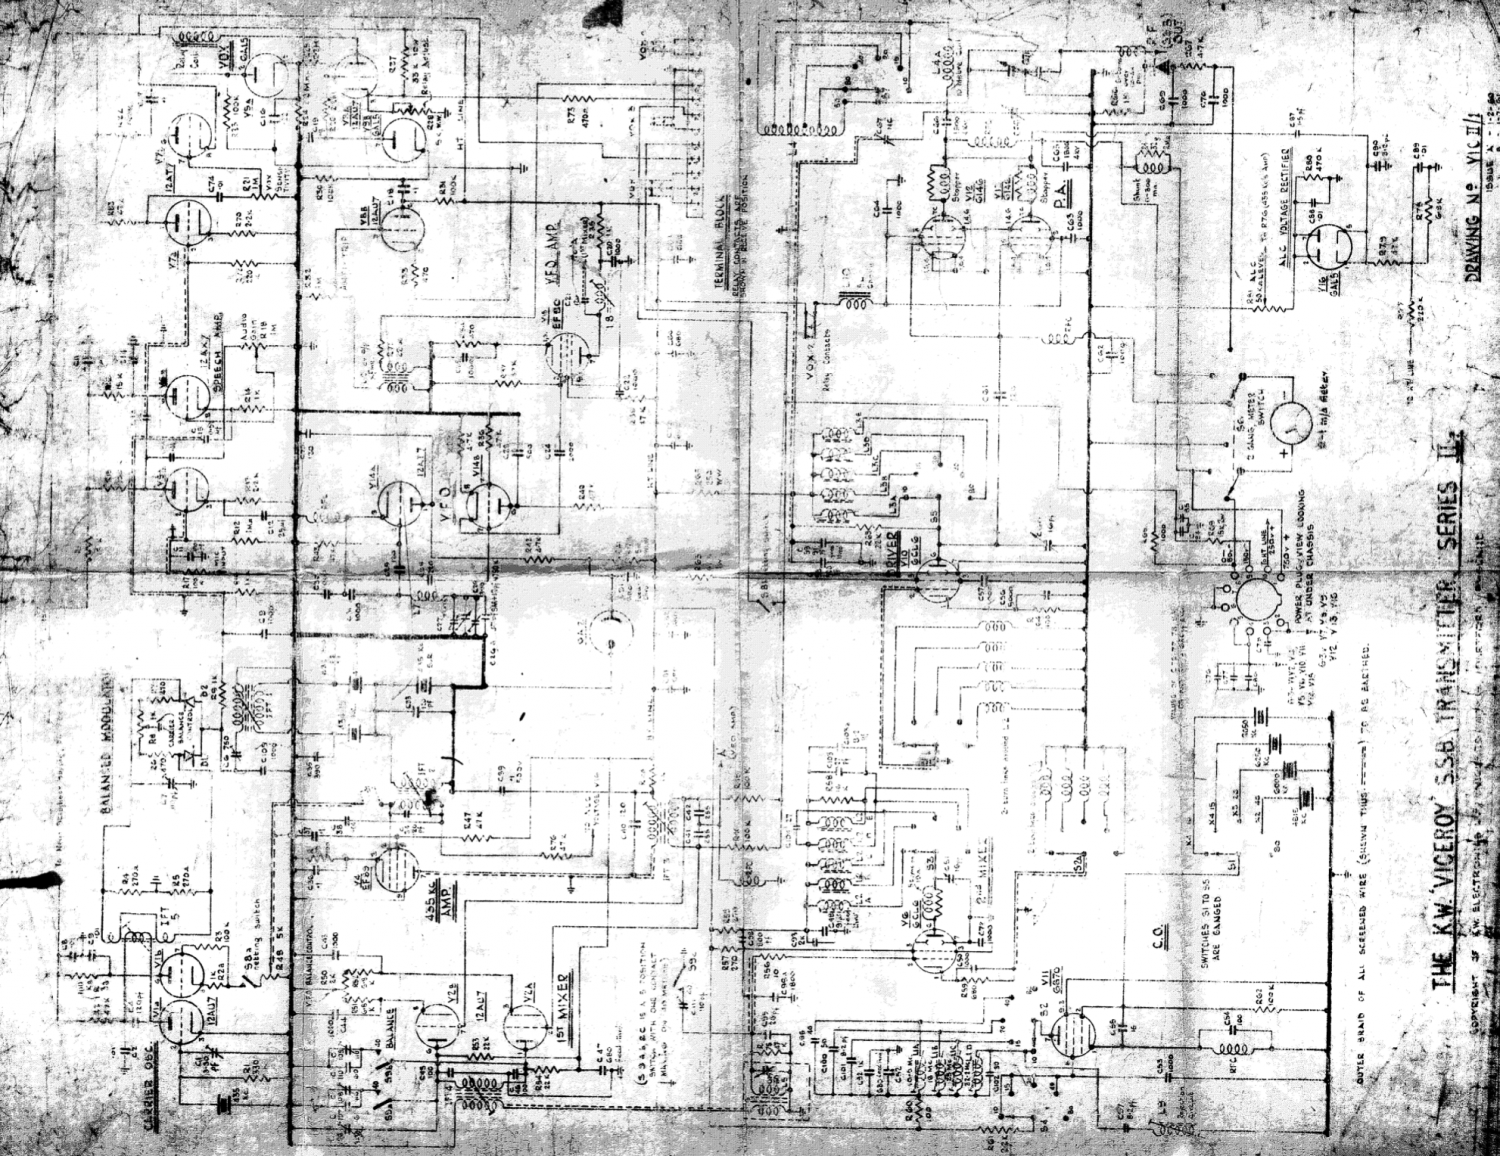 KW Viceroy Mk II - Schematic Diagram (1st July 1961) (Source Roger Bracey G4BZI)